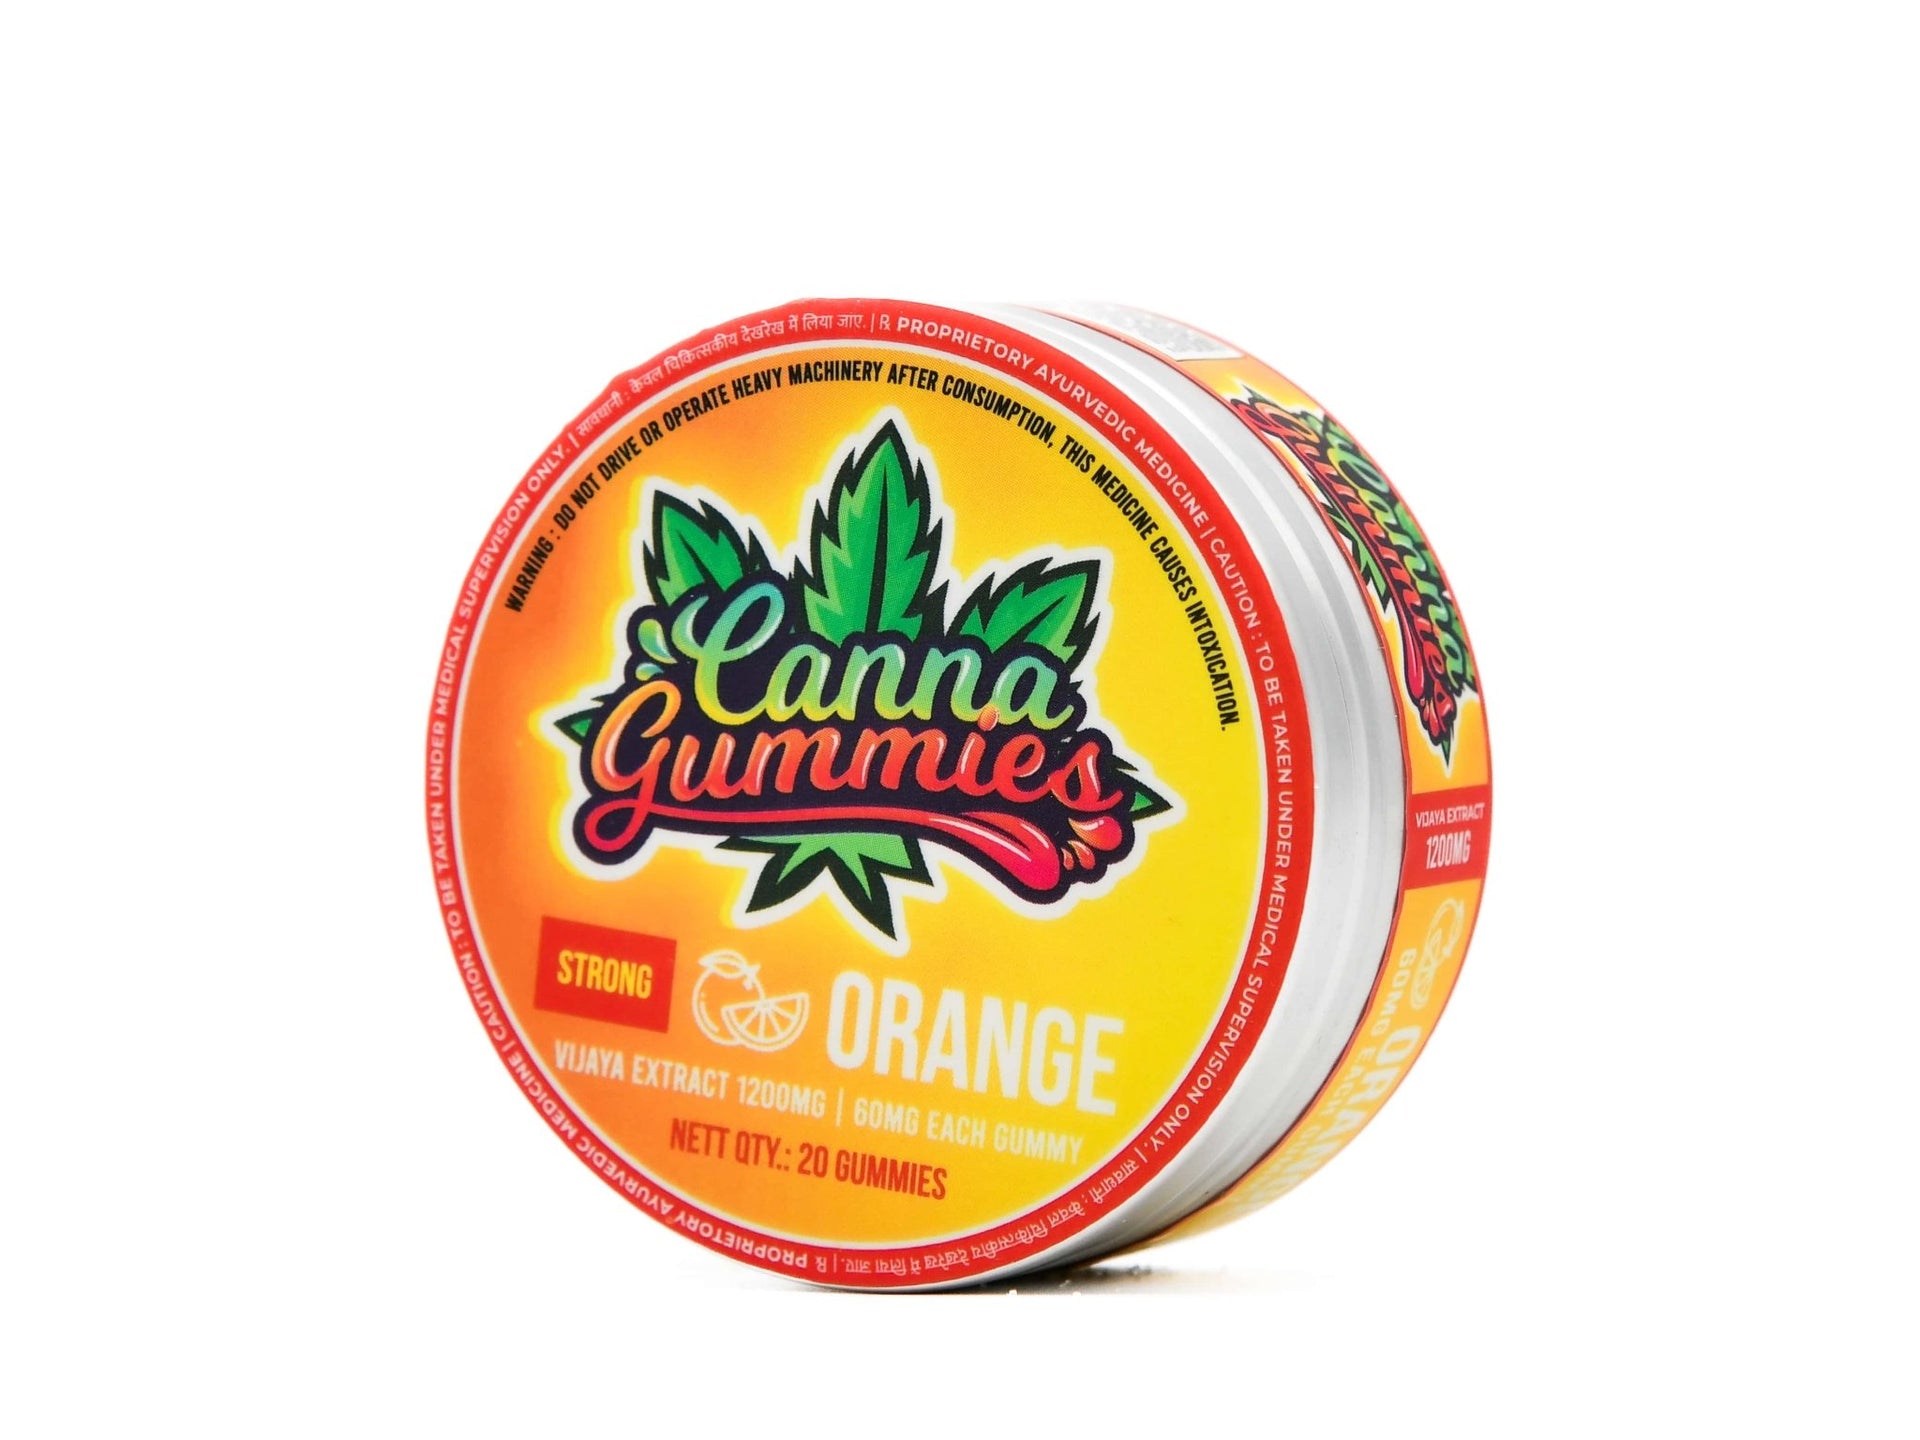 Canna Gummies - Cannabis Infused Gummies 1:1 - Orange - CBD Store India